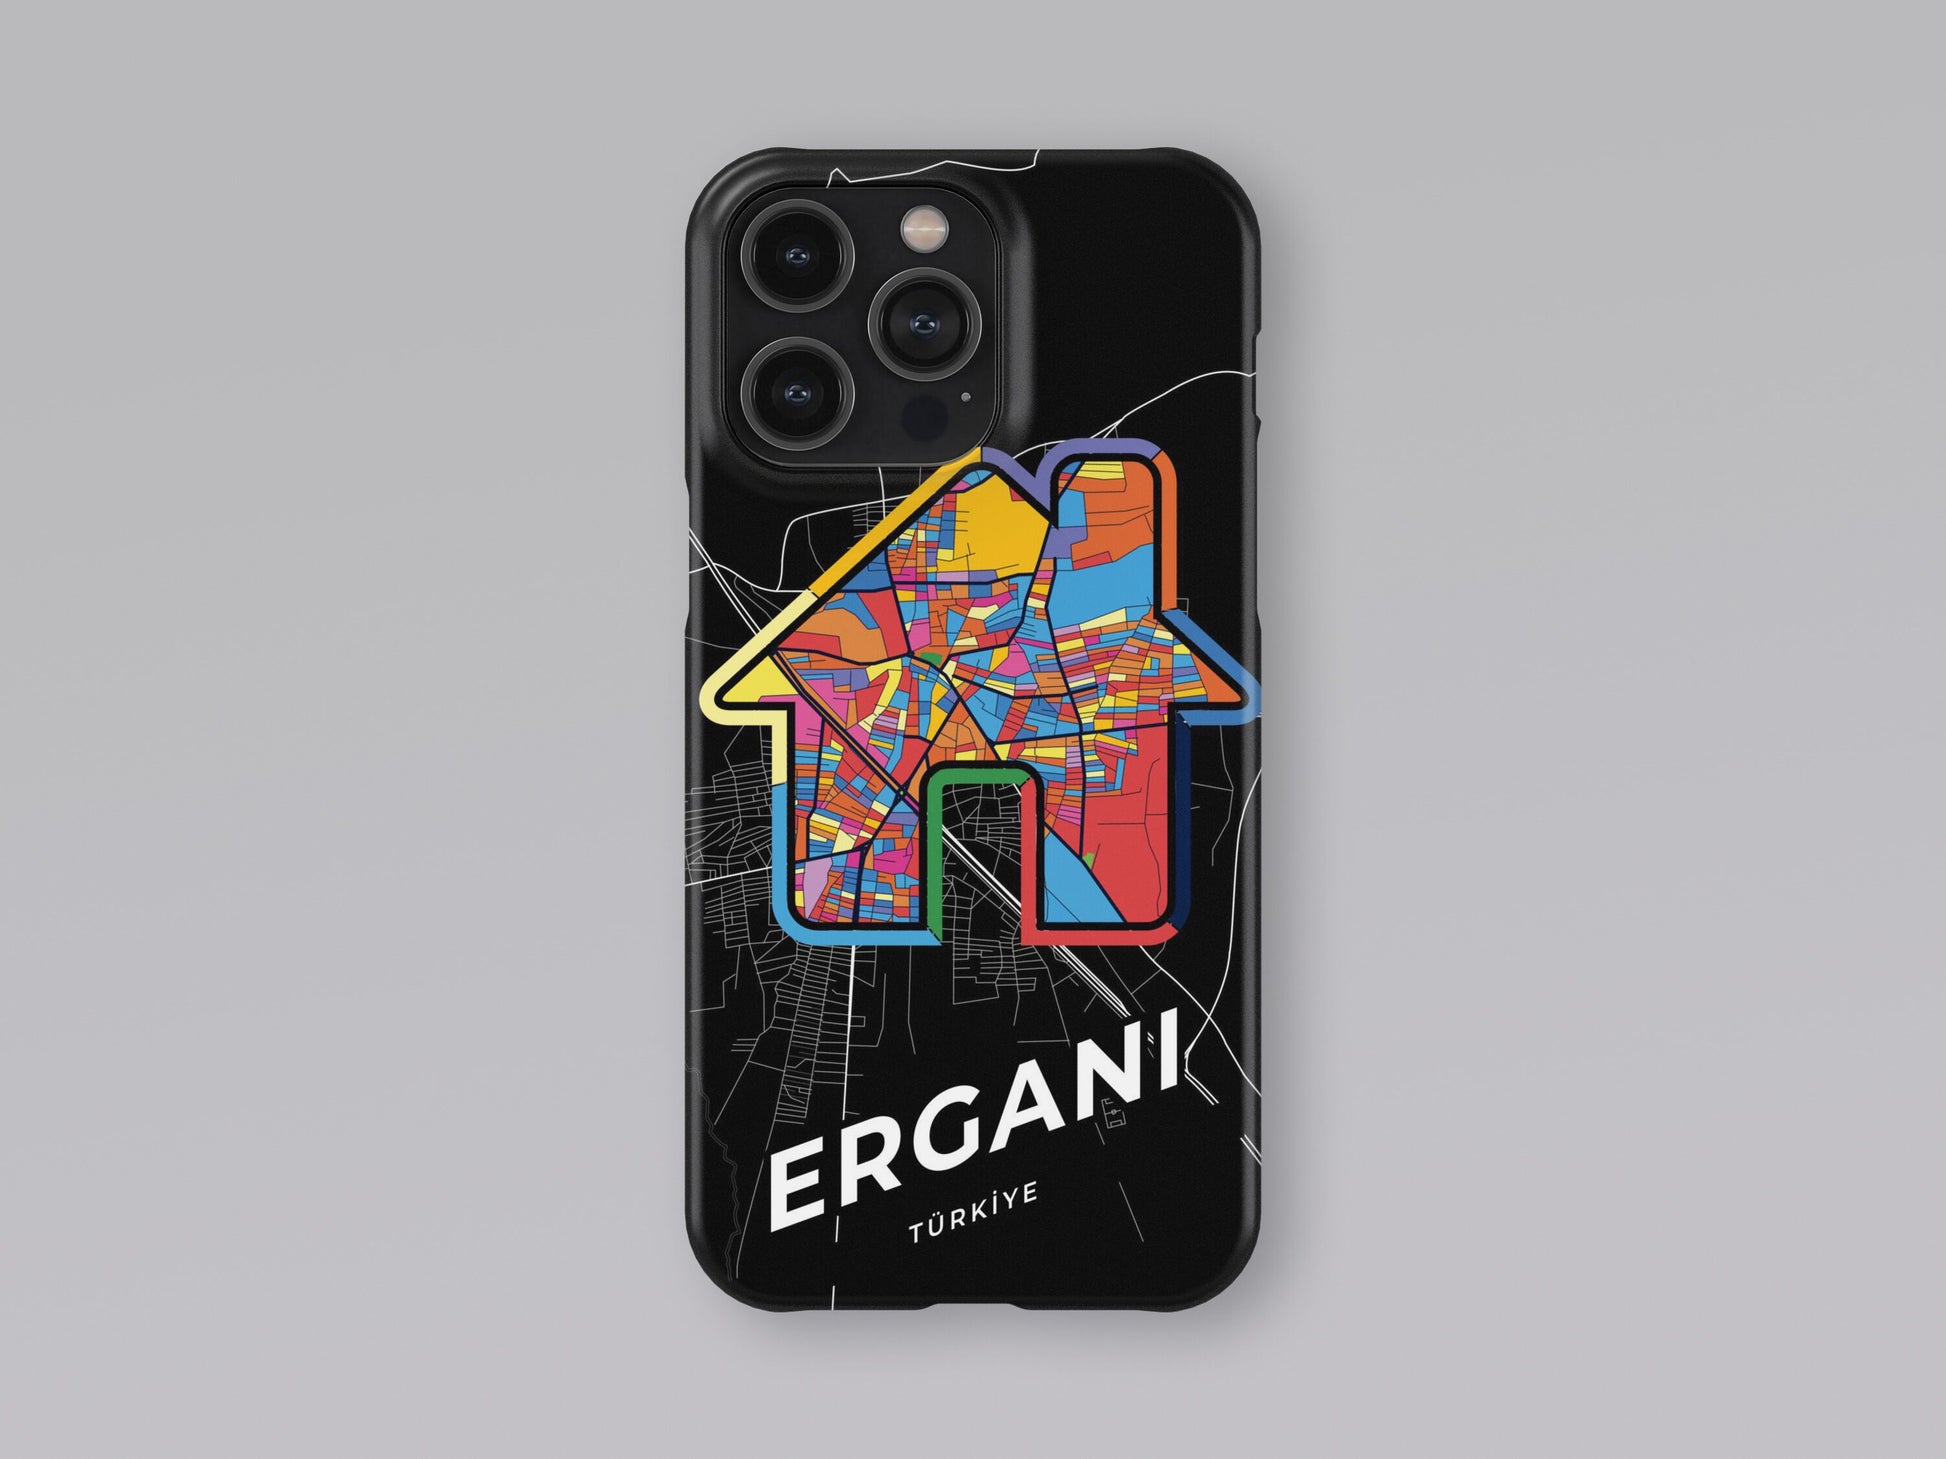 Ergani Turkey slim phone case with colorful icon. Birthday, wedding or housewarming gift. Couple match cases. 3